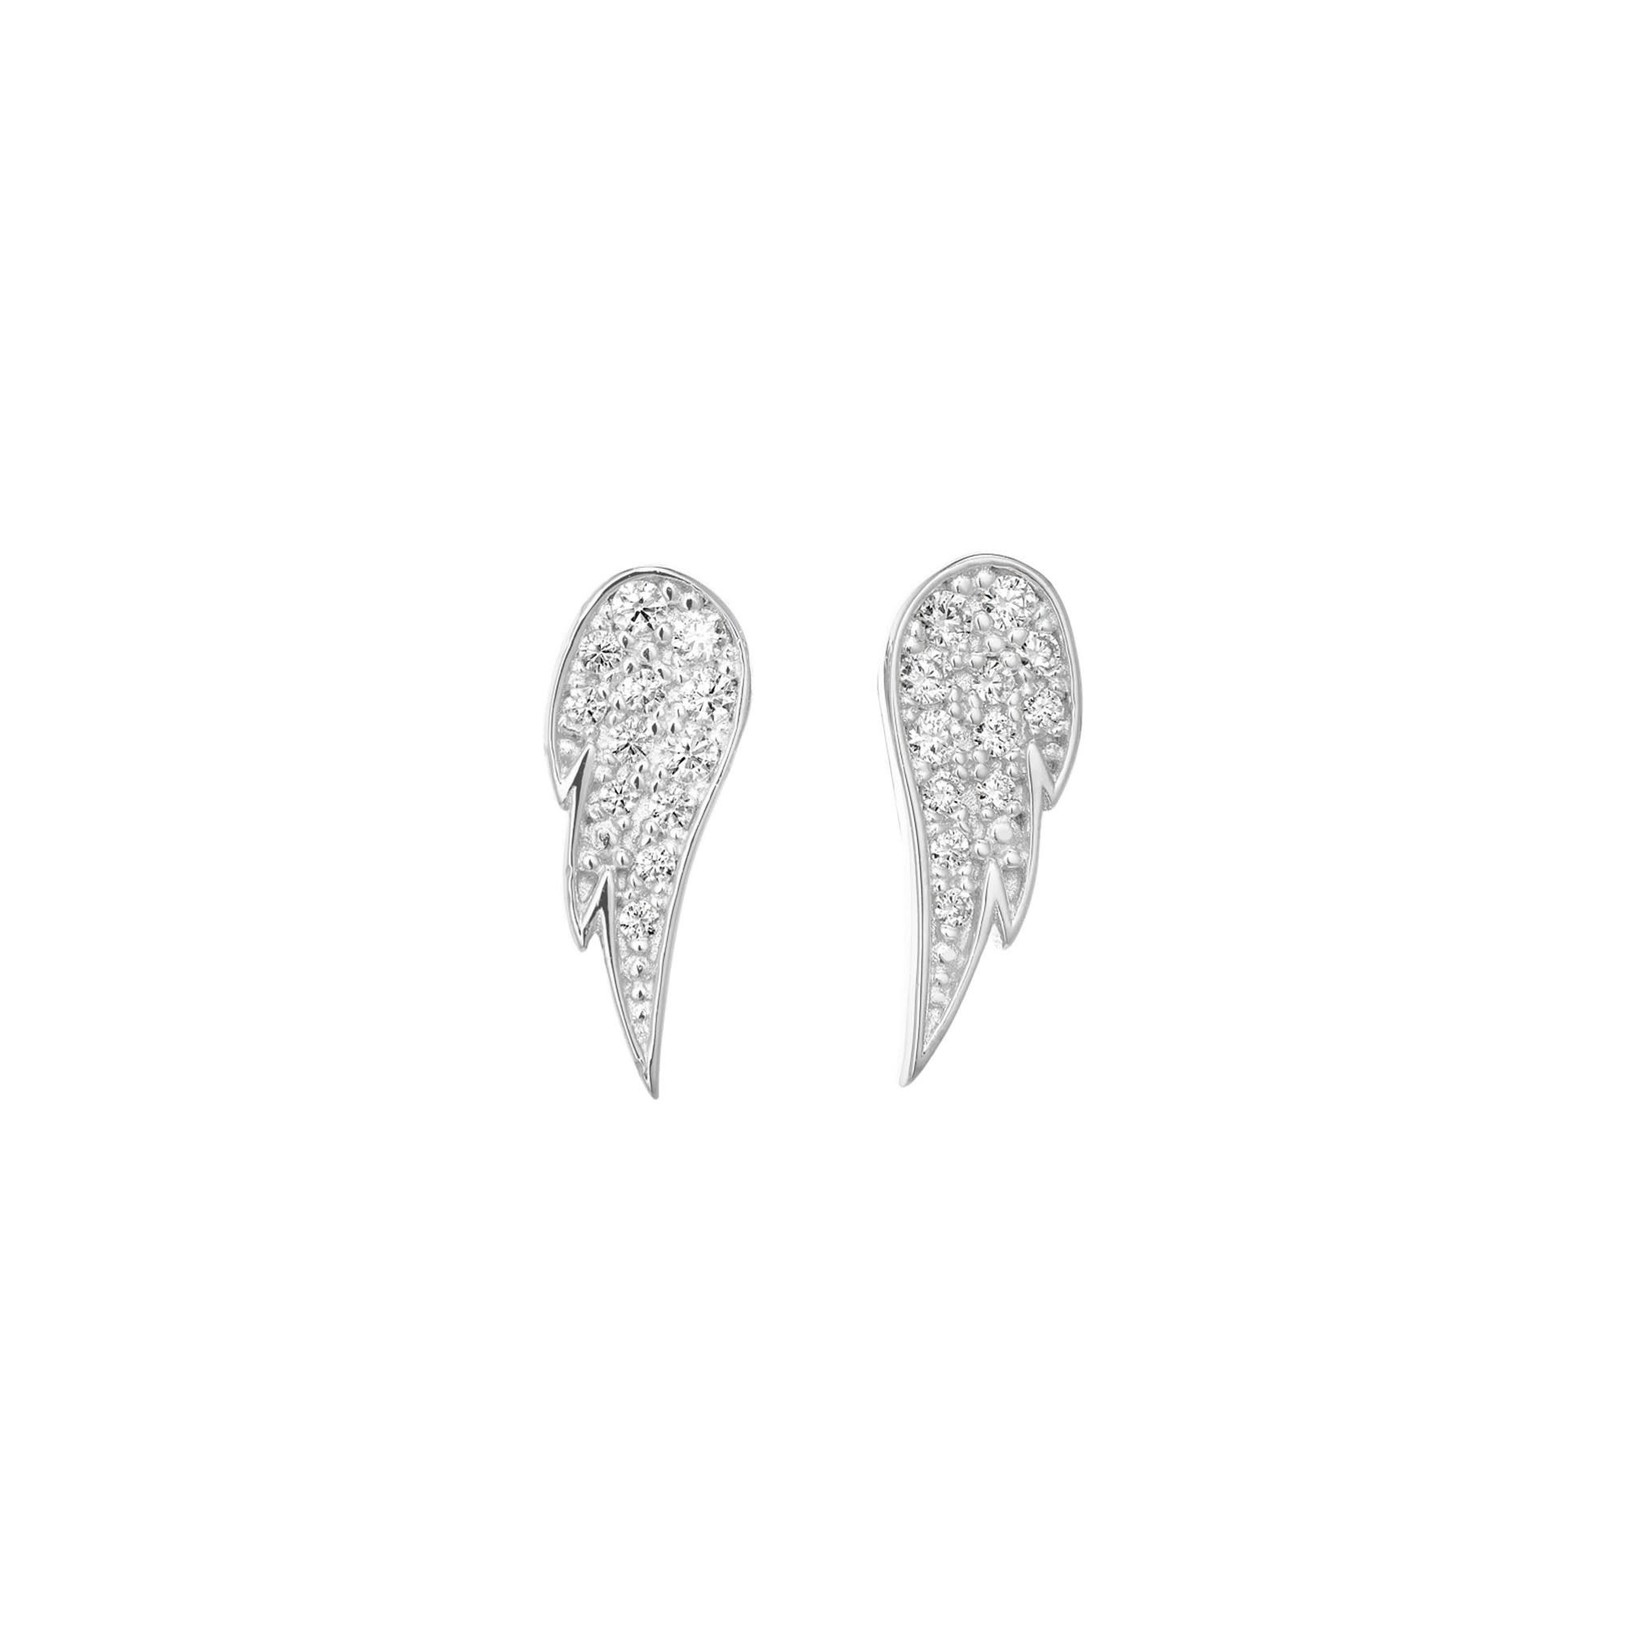 KELLY WATERS INC. Sterling Silver Angel Wings Earrings w/Simulated Diamonds